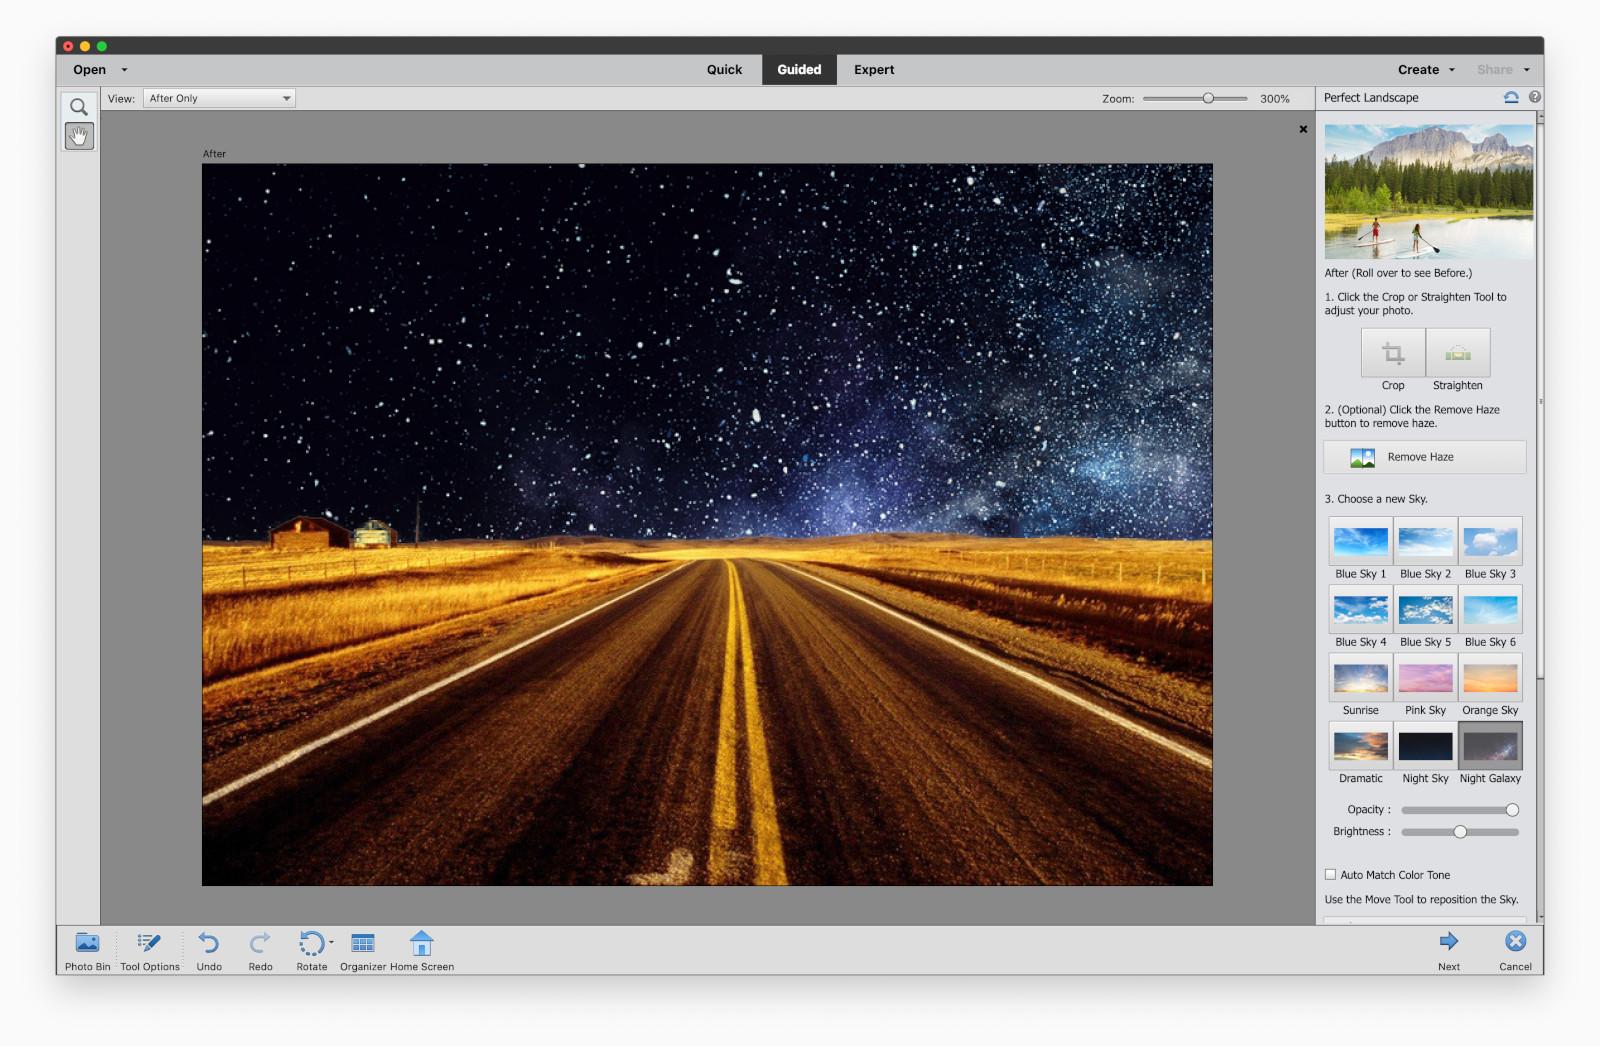 best free photo organization software for mac